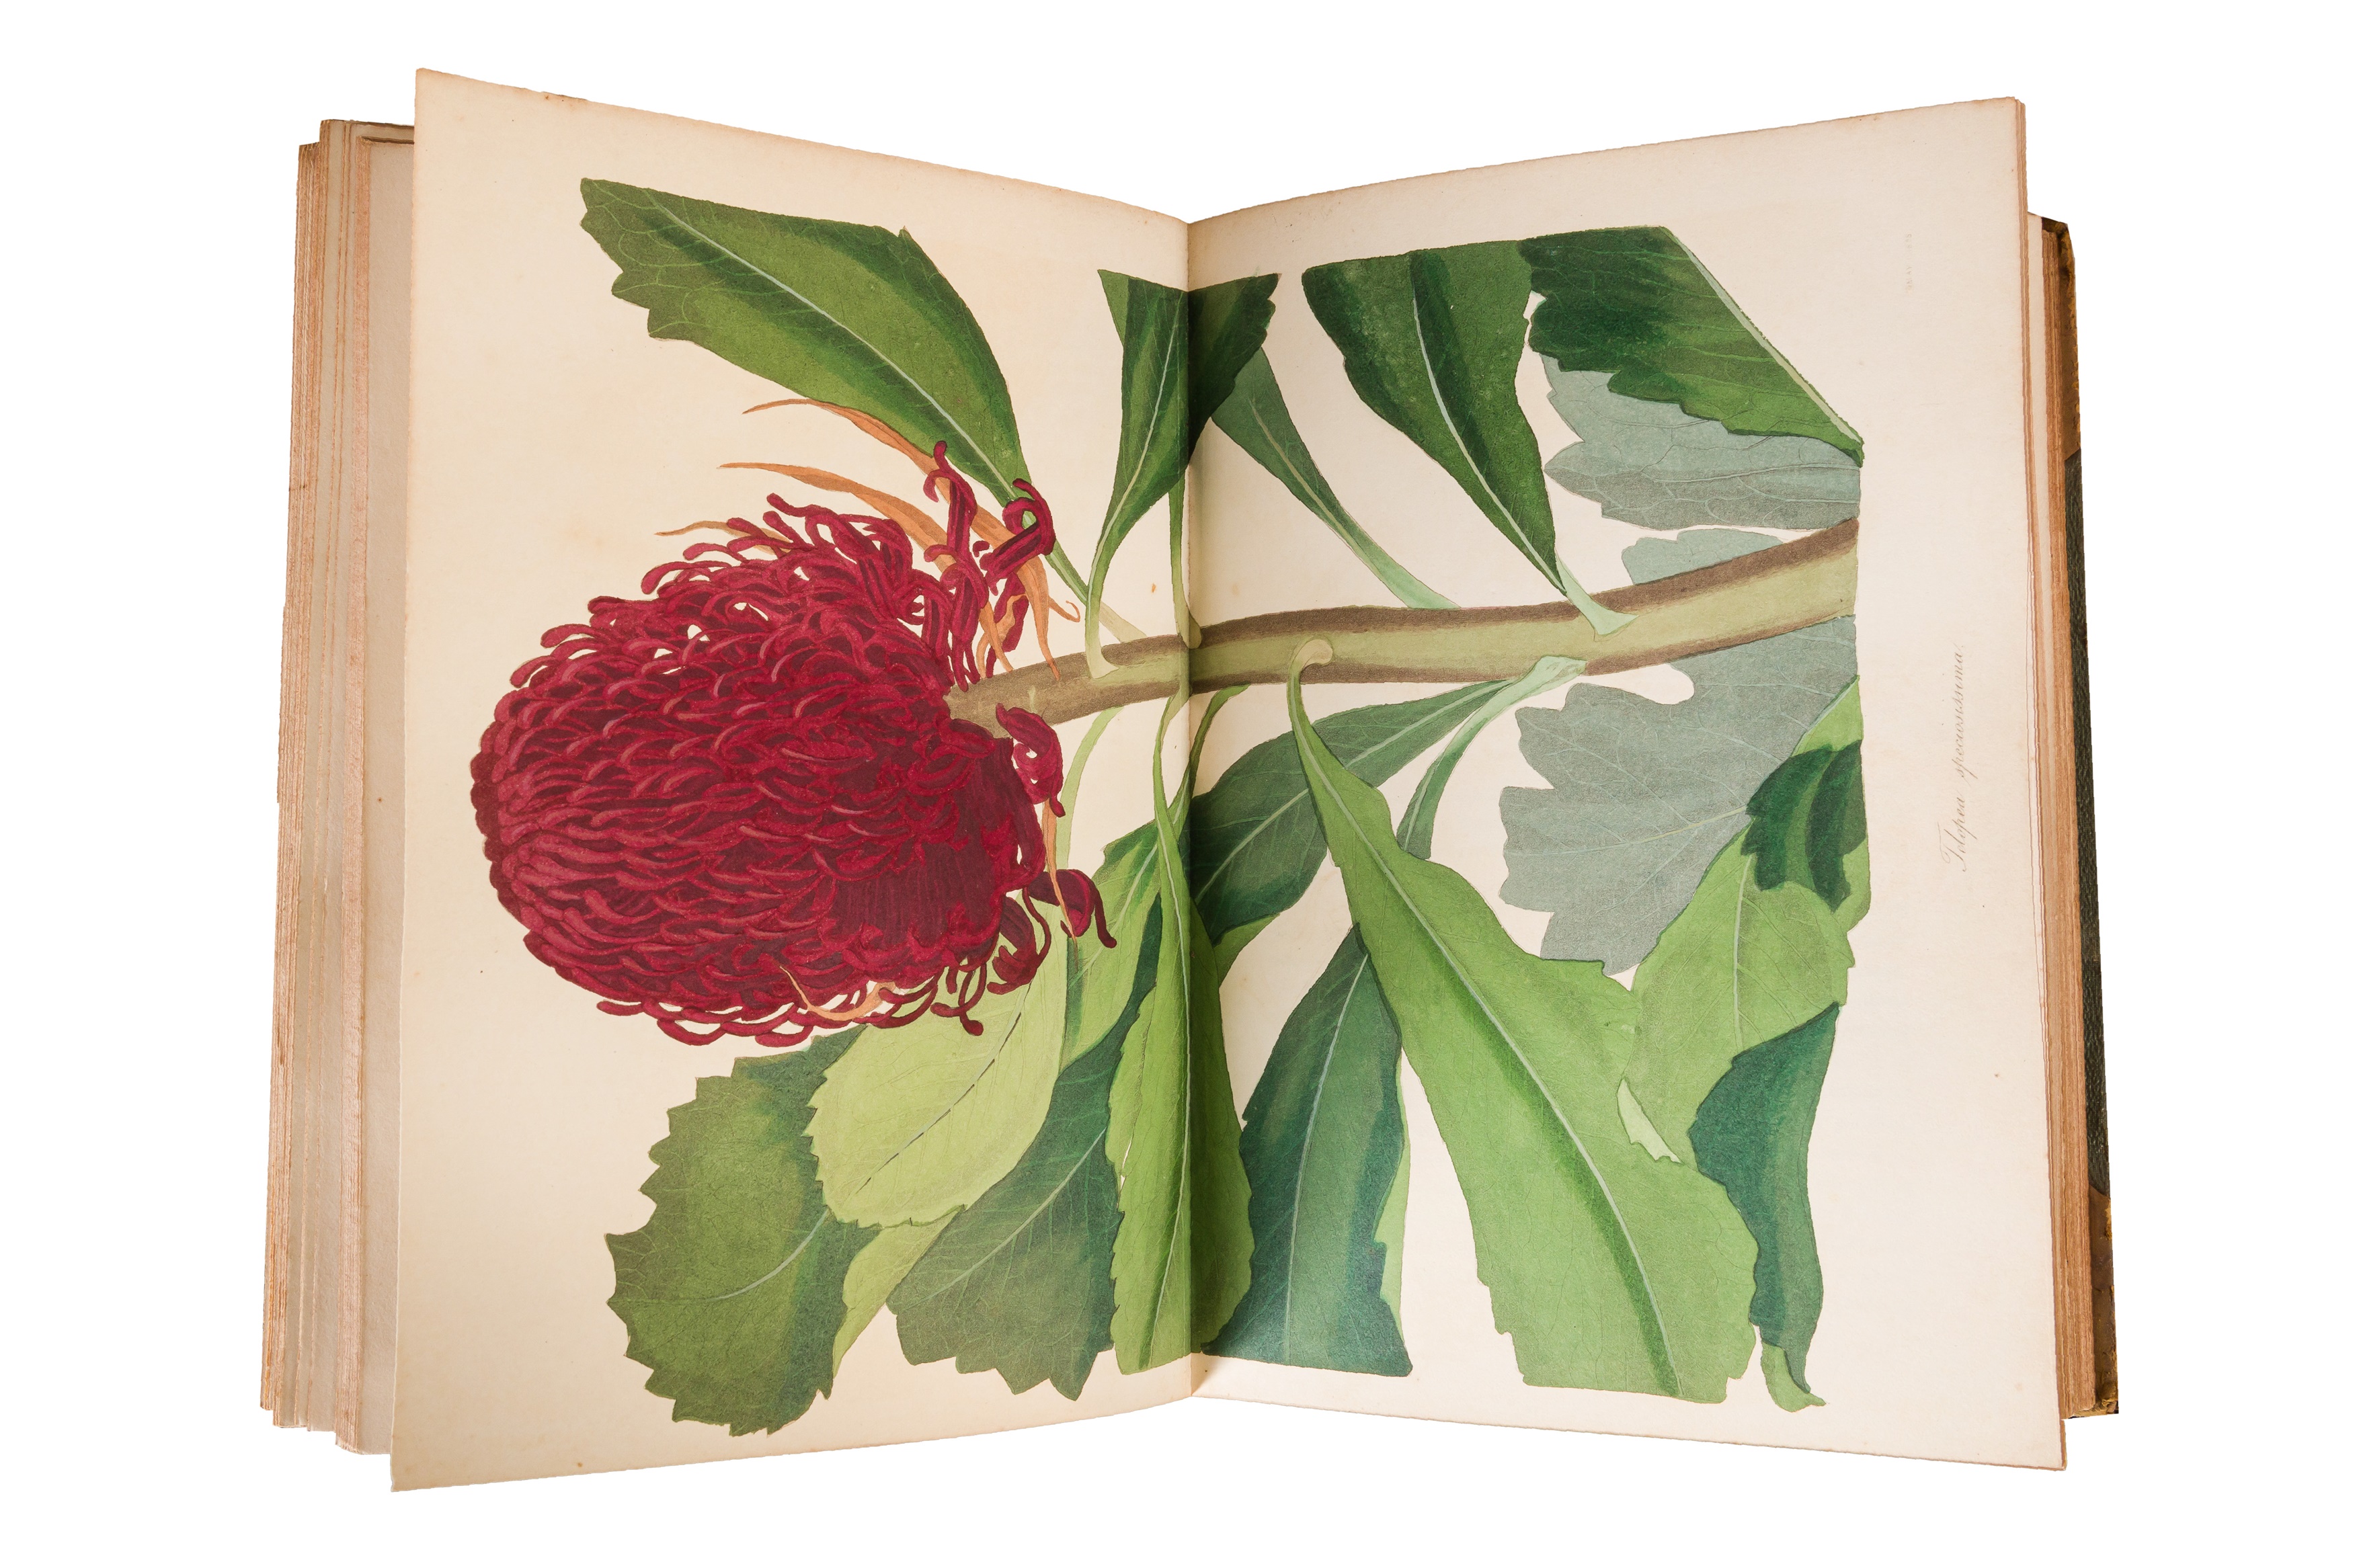 Botanical plates. Harrison & Paxton - Image 4 of 5